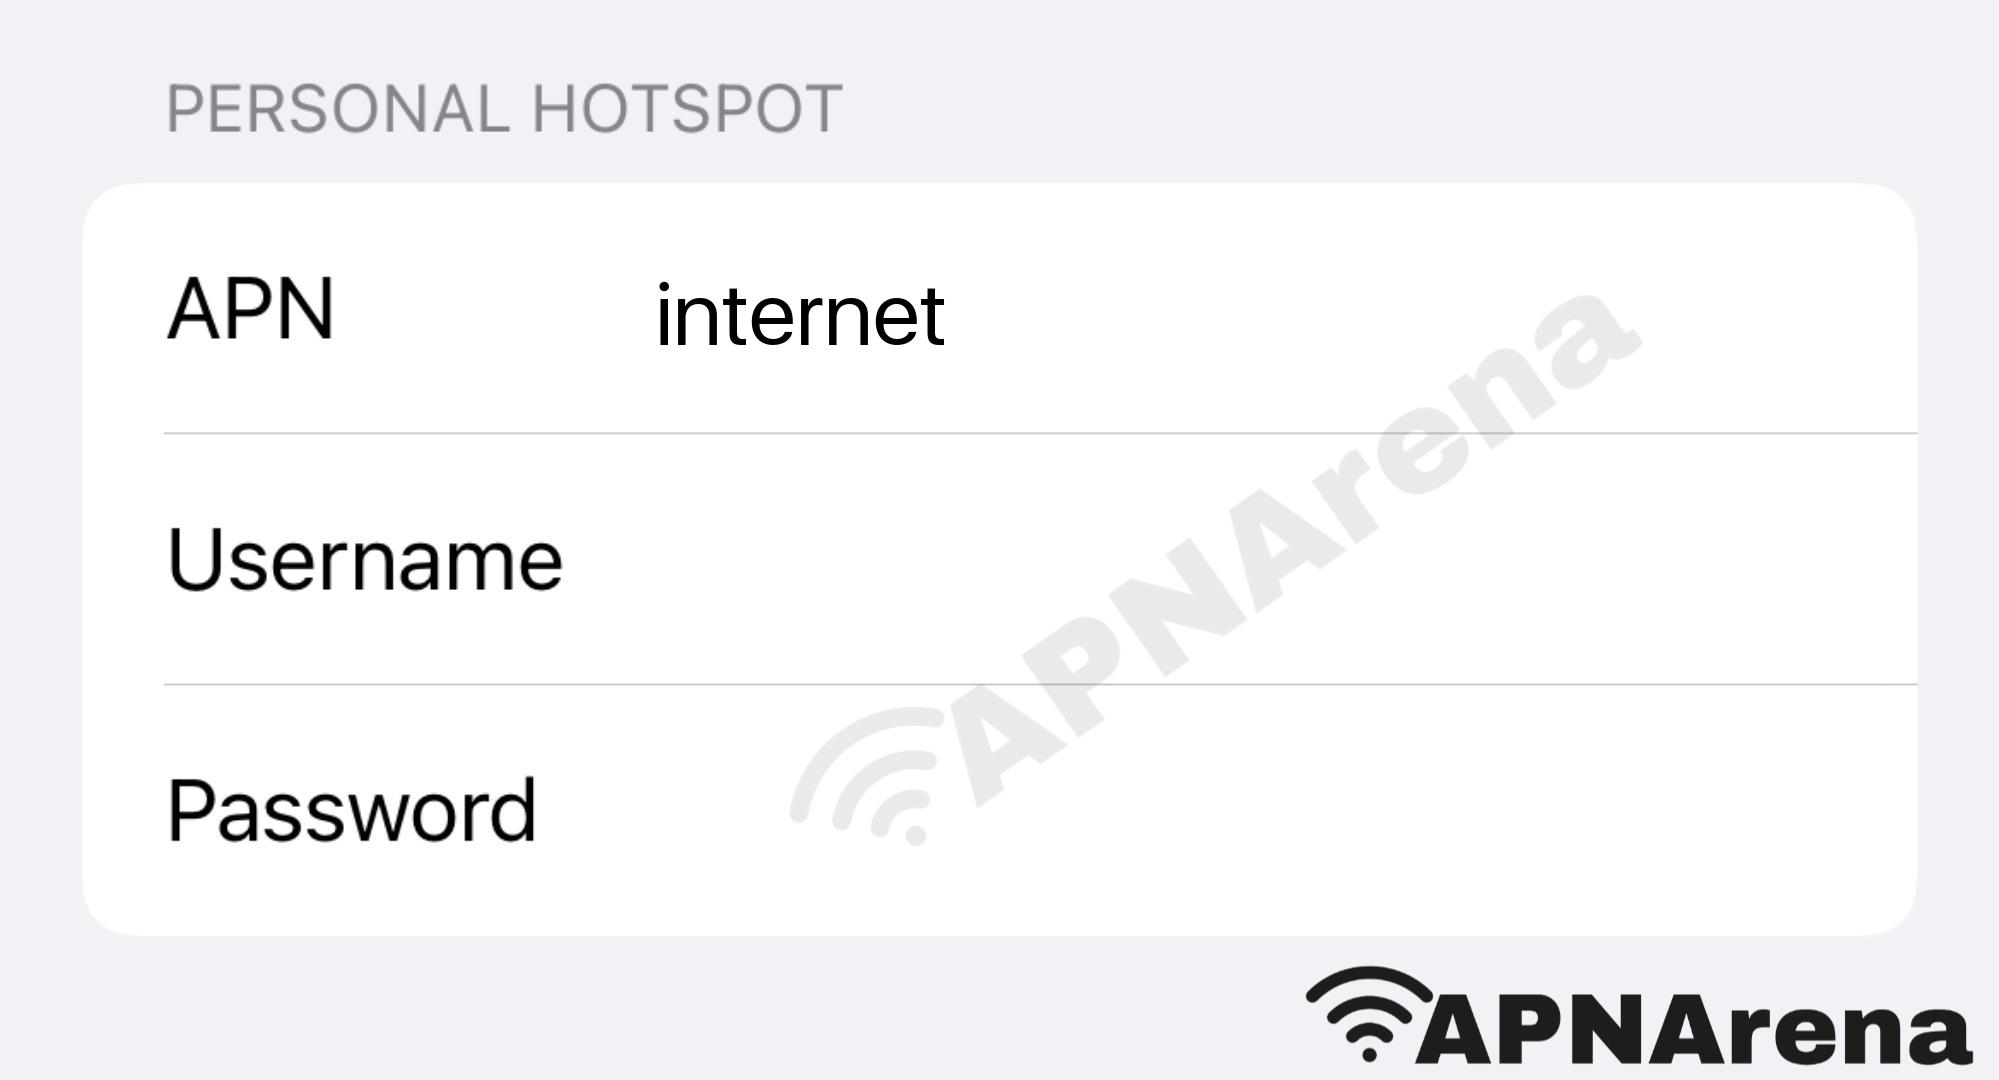 Omantel Personal Hotspot Settings for iPhone